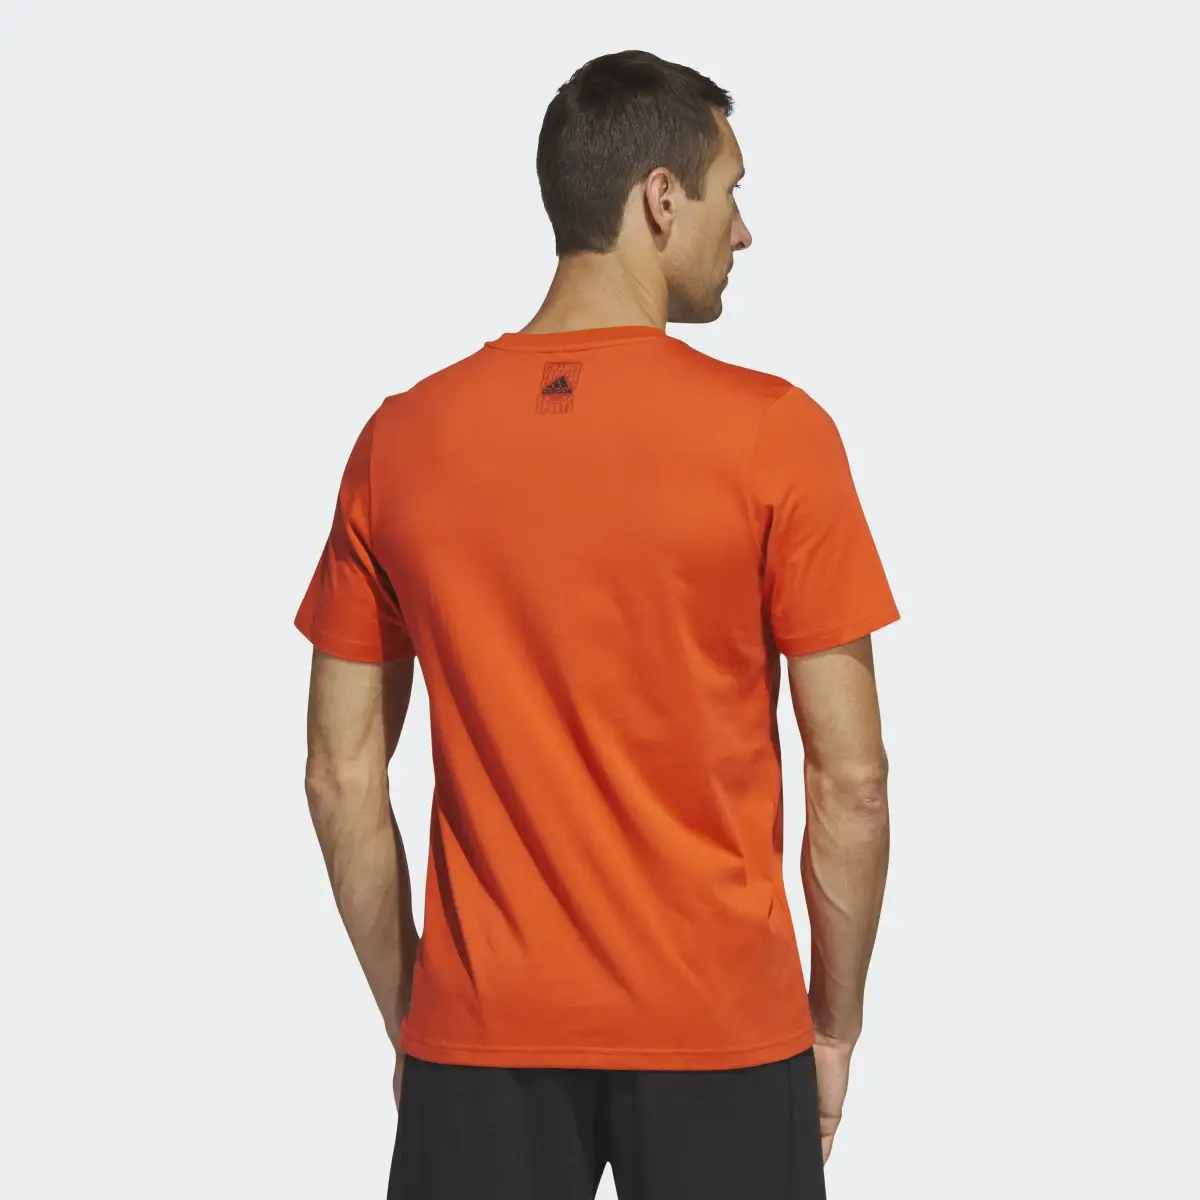 Adidas Change Through Sports Earth Graphic T-Shirt. 3